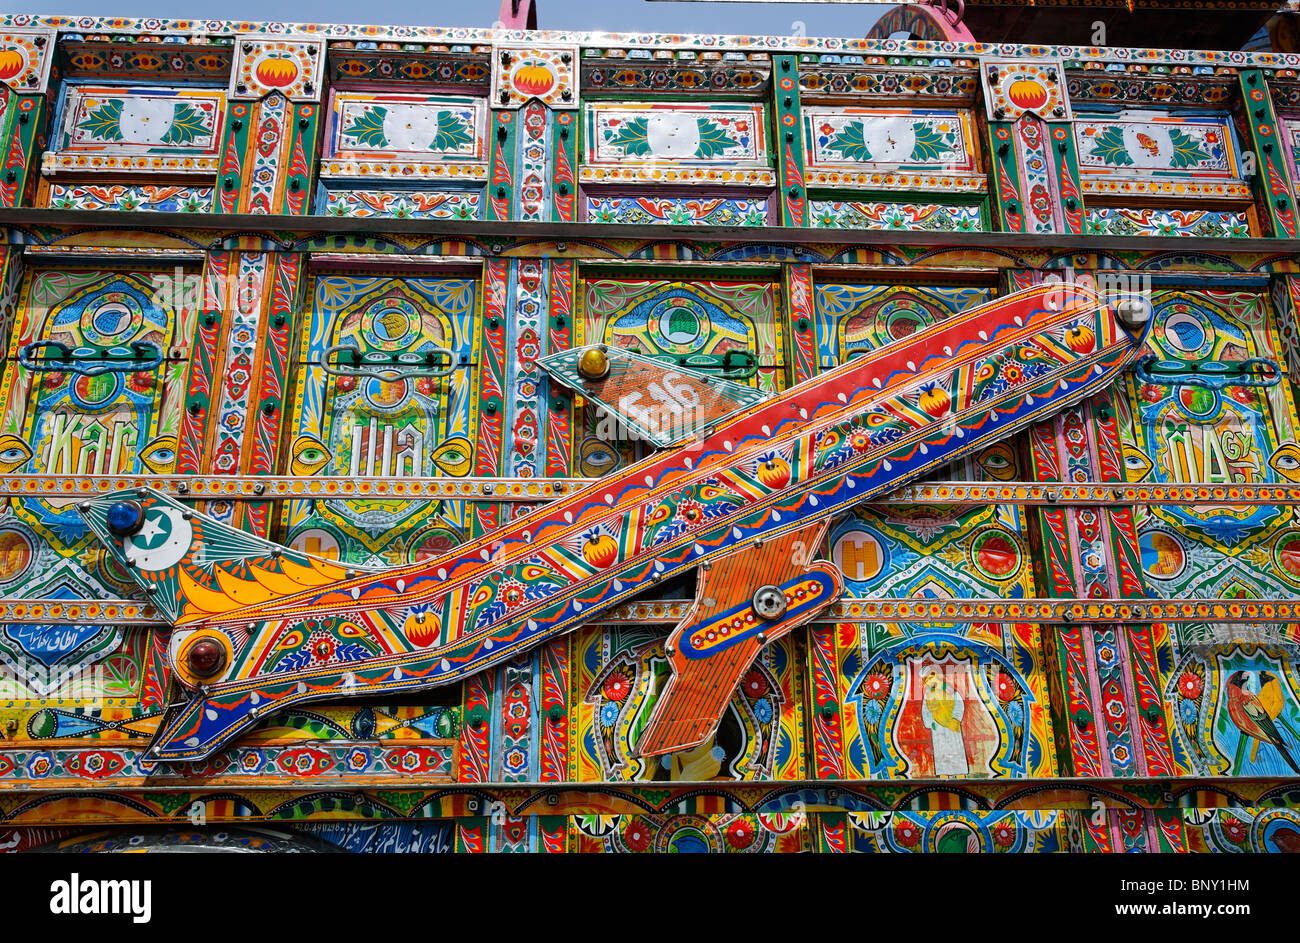 Pakistan - Punjab - Rawalpindi - detail of the paintword on a decorated truck Stock Photo